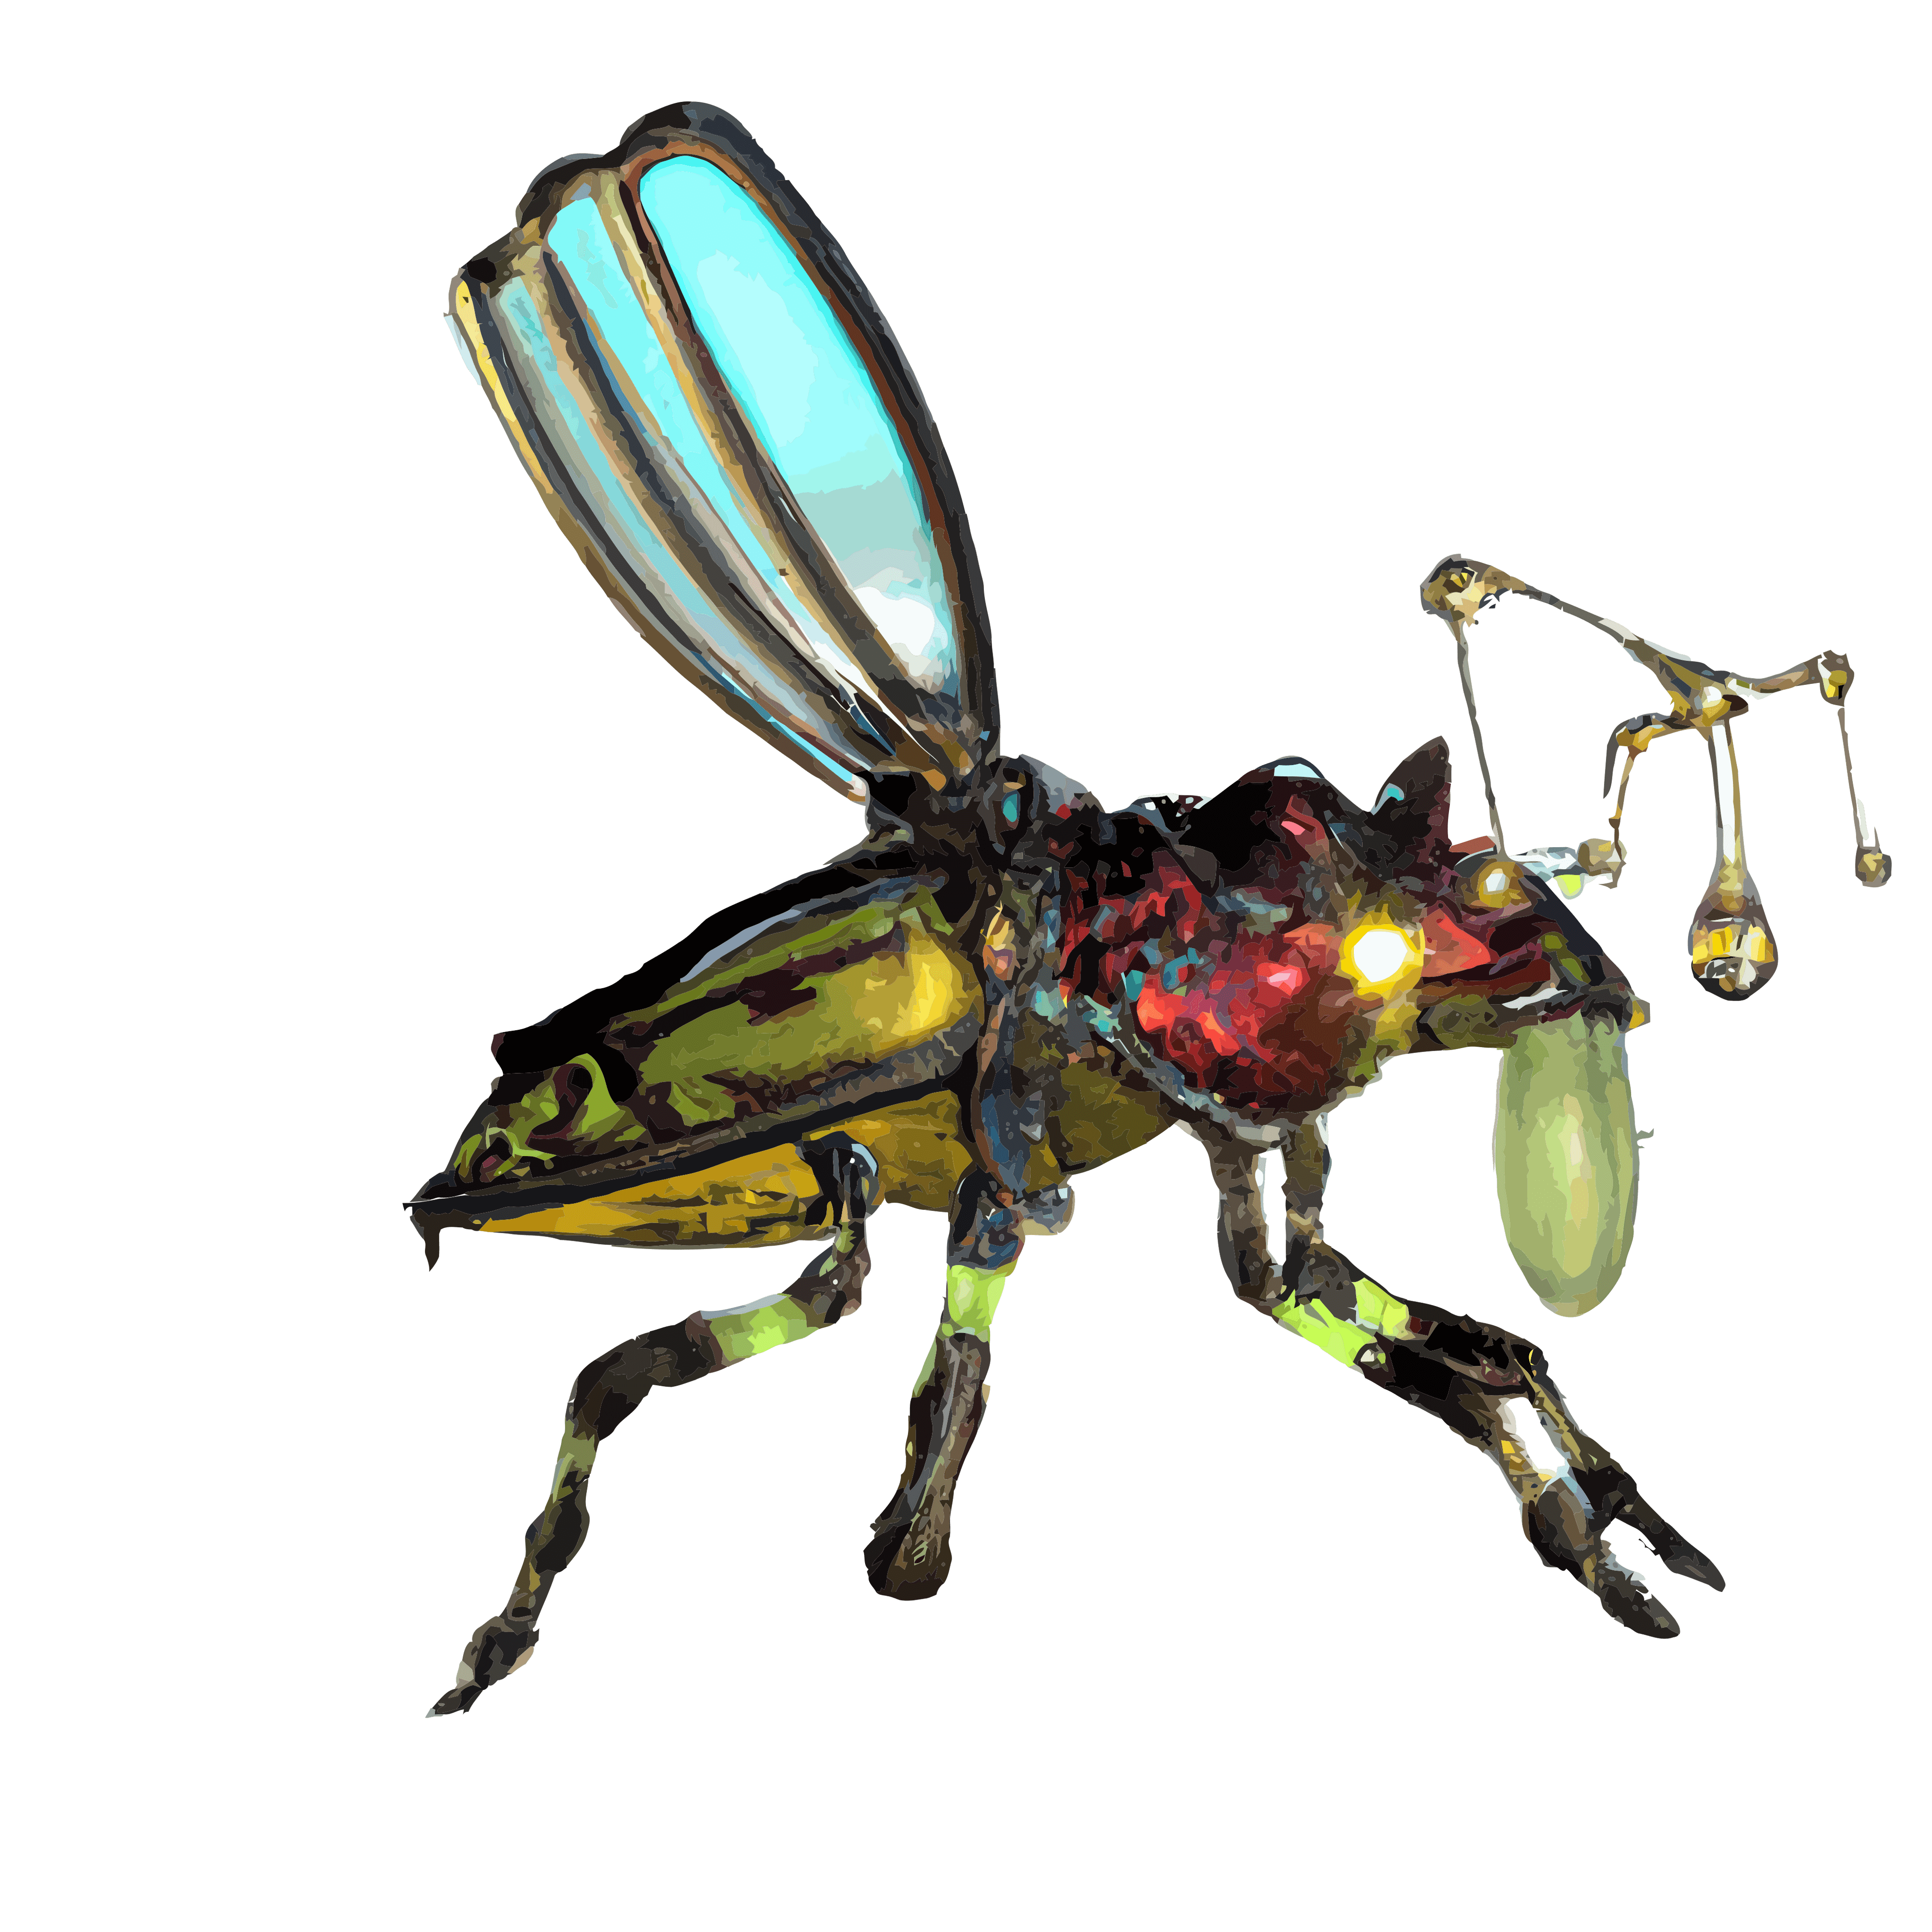 Firefly Lantern 8